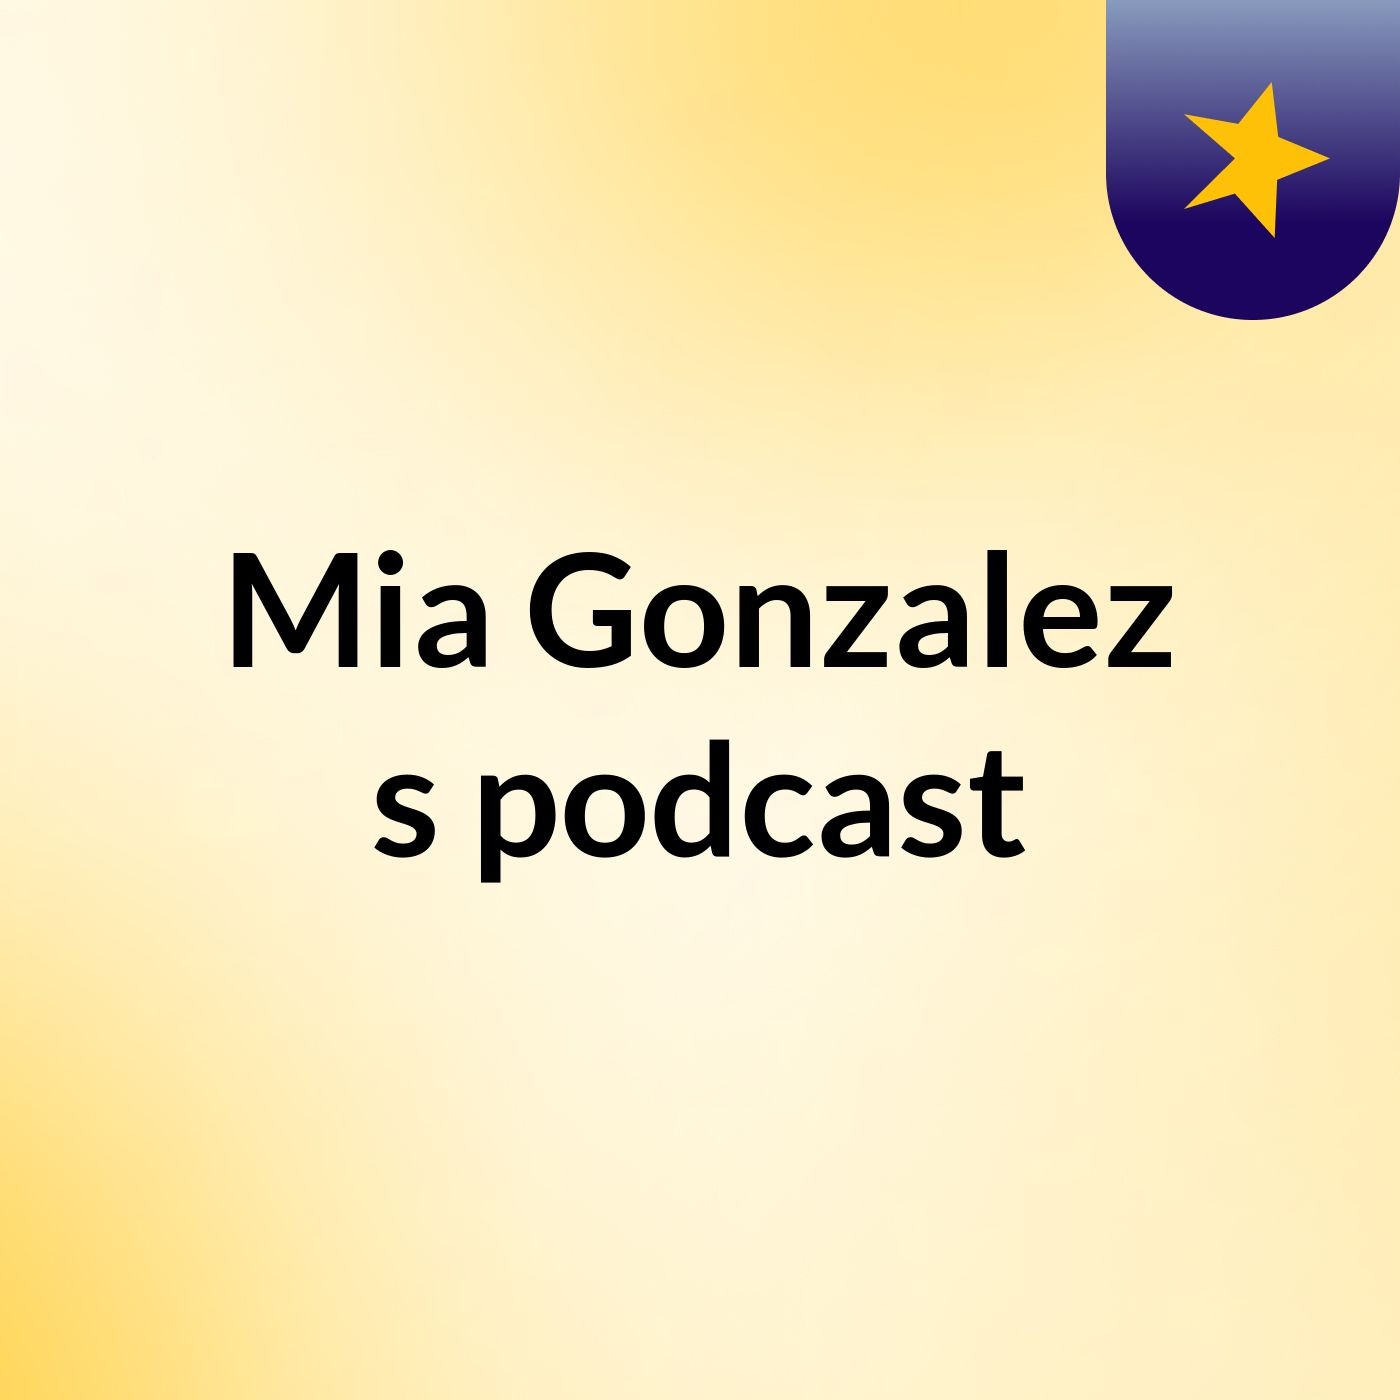 Episode 2 - Mia Gonzalez's podcast